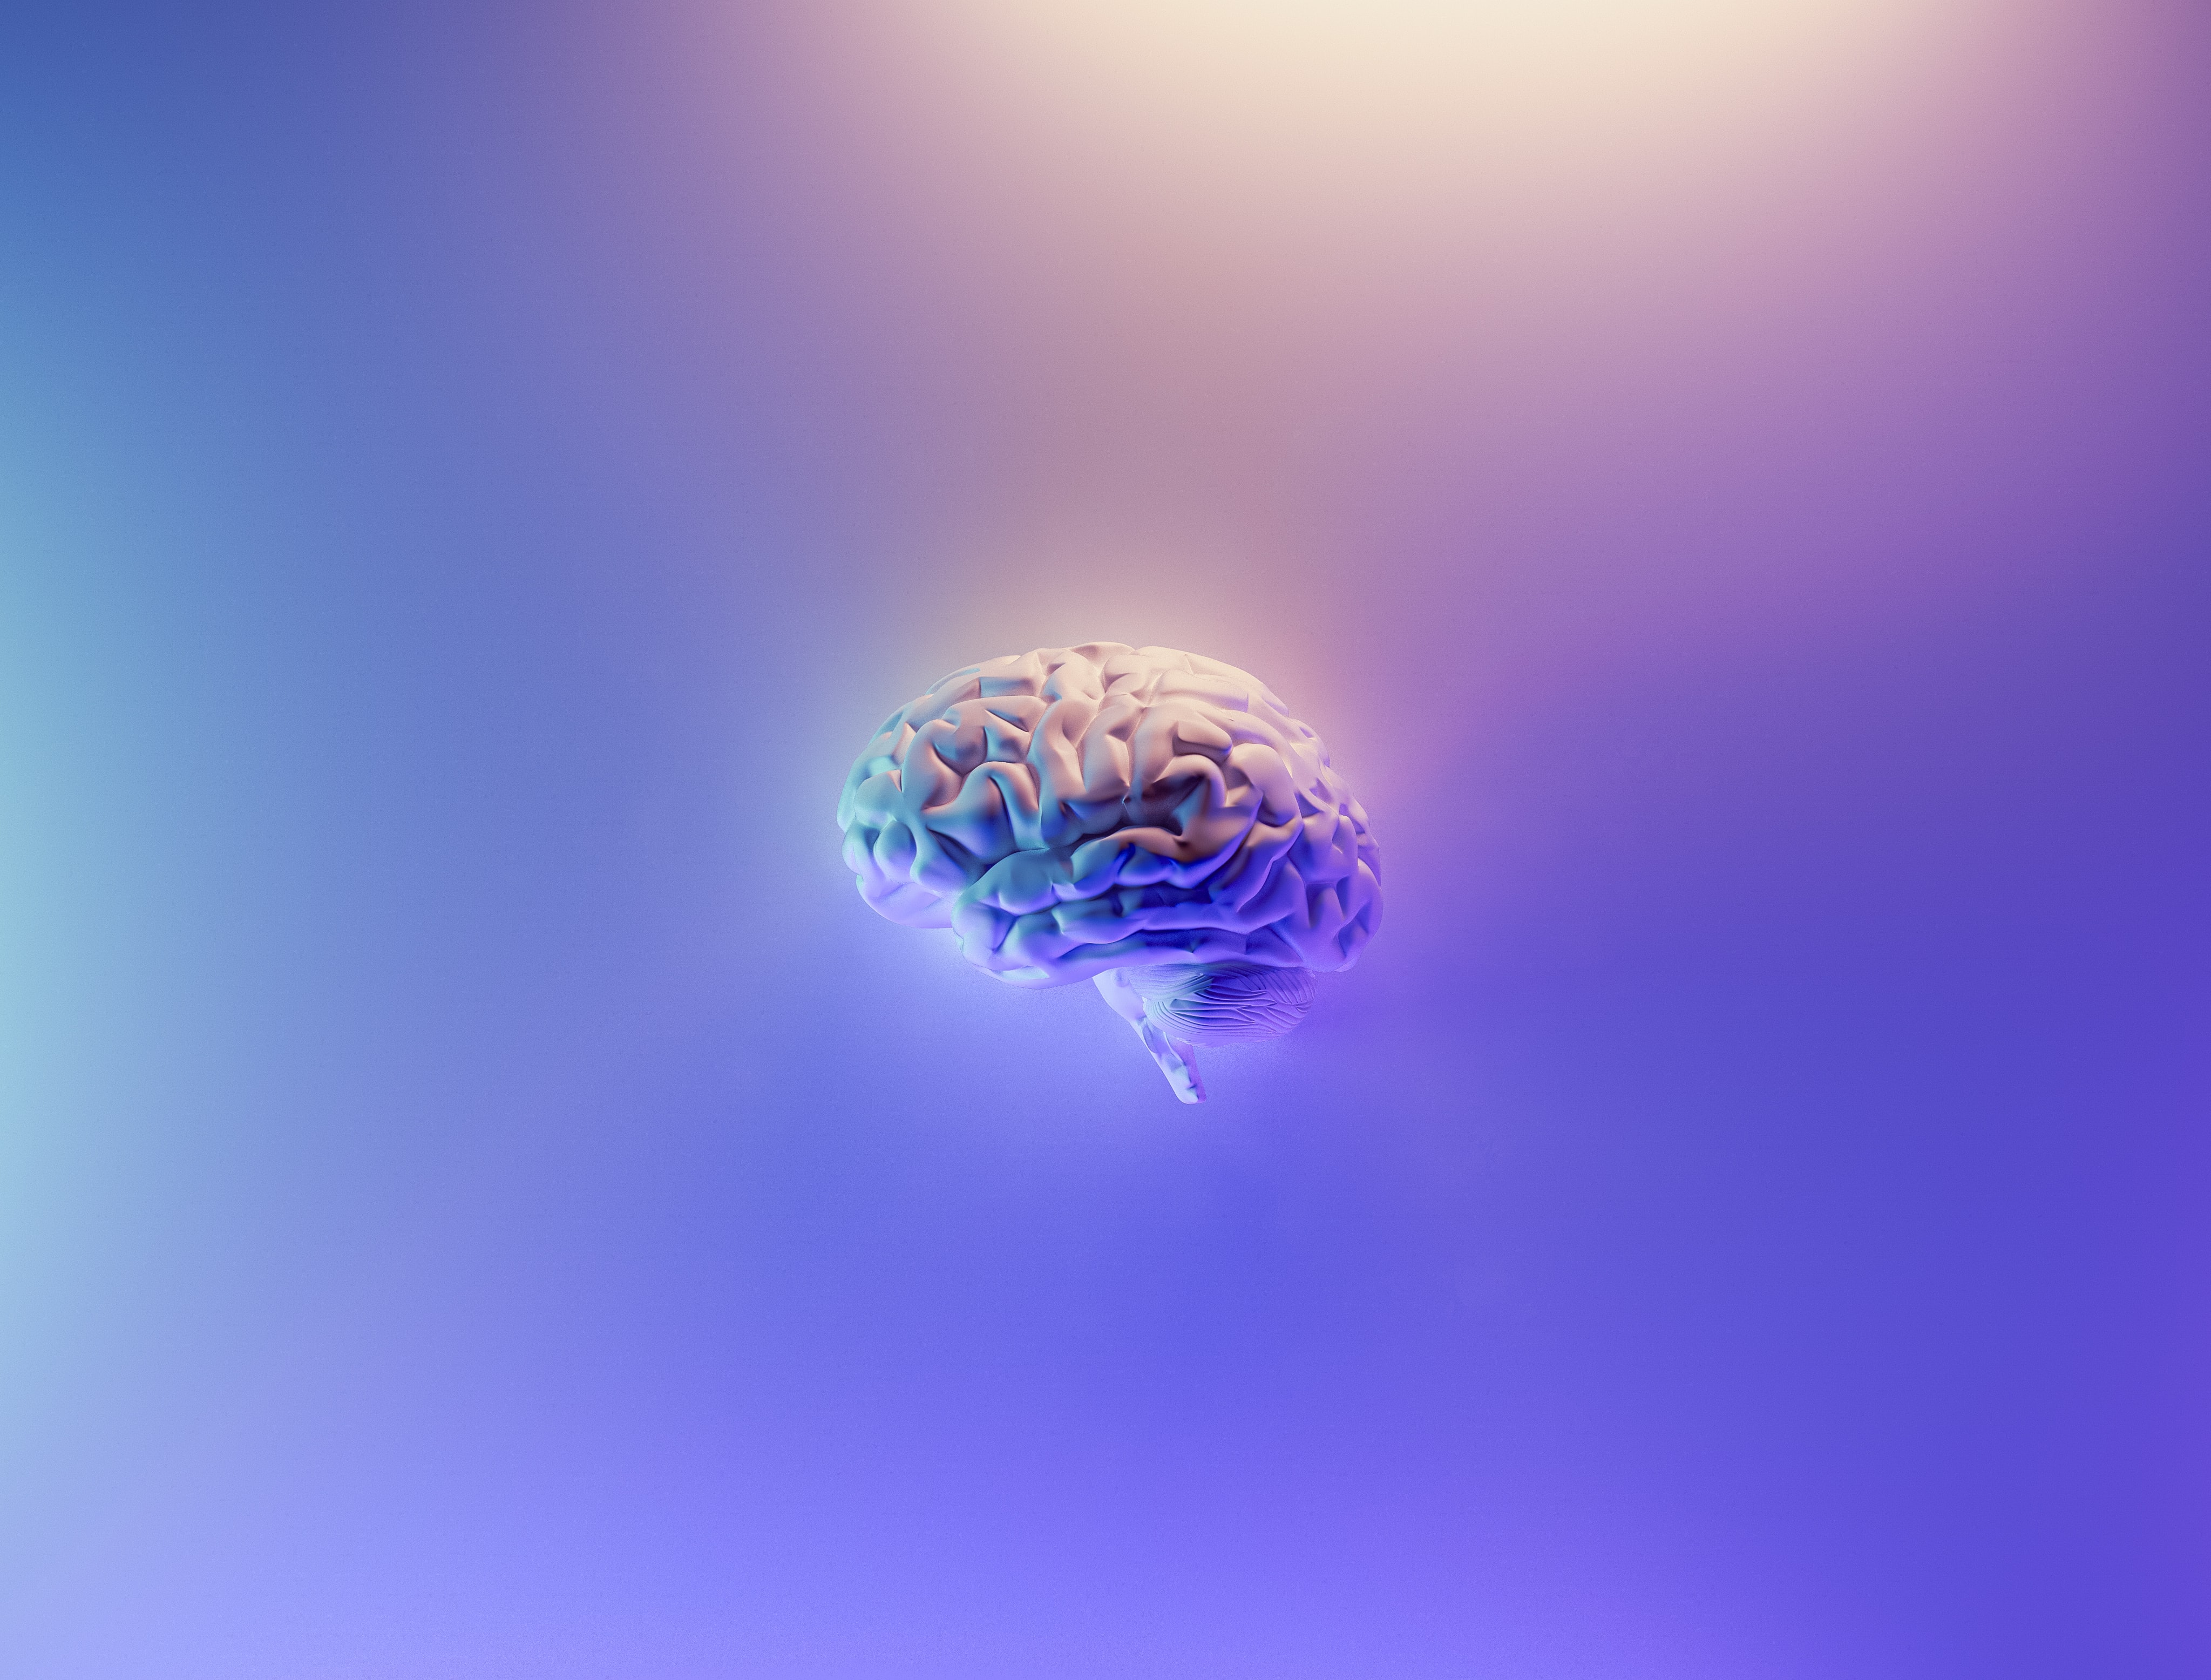 Model of the brain; image by Milad Fakurian, via Unsplash.com.